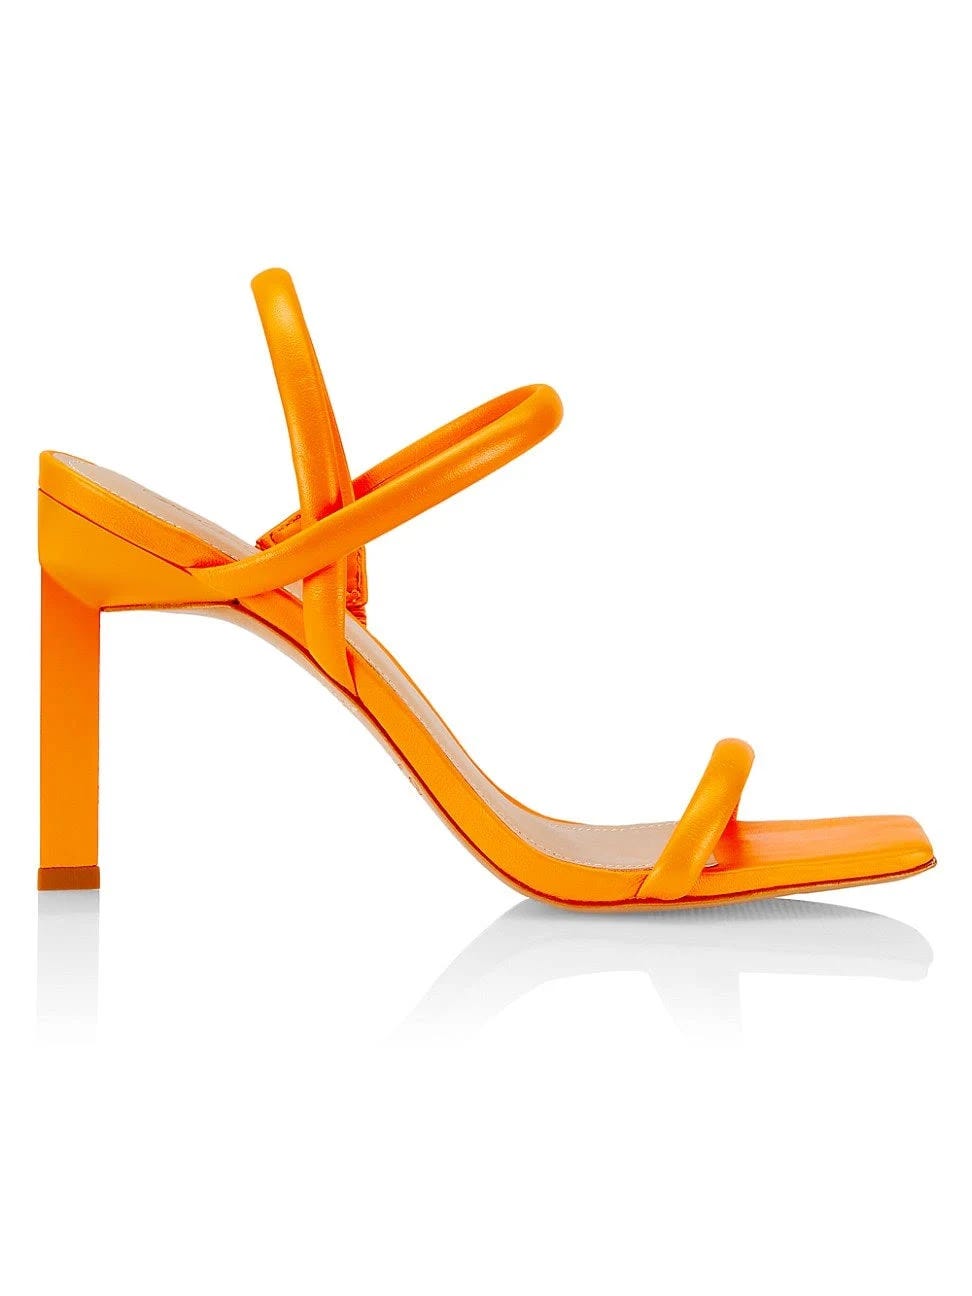 Citrus-Orange Prom Shoes by Saks Fifth Avenue | Image